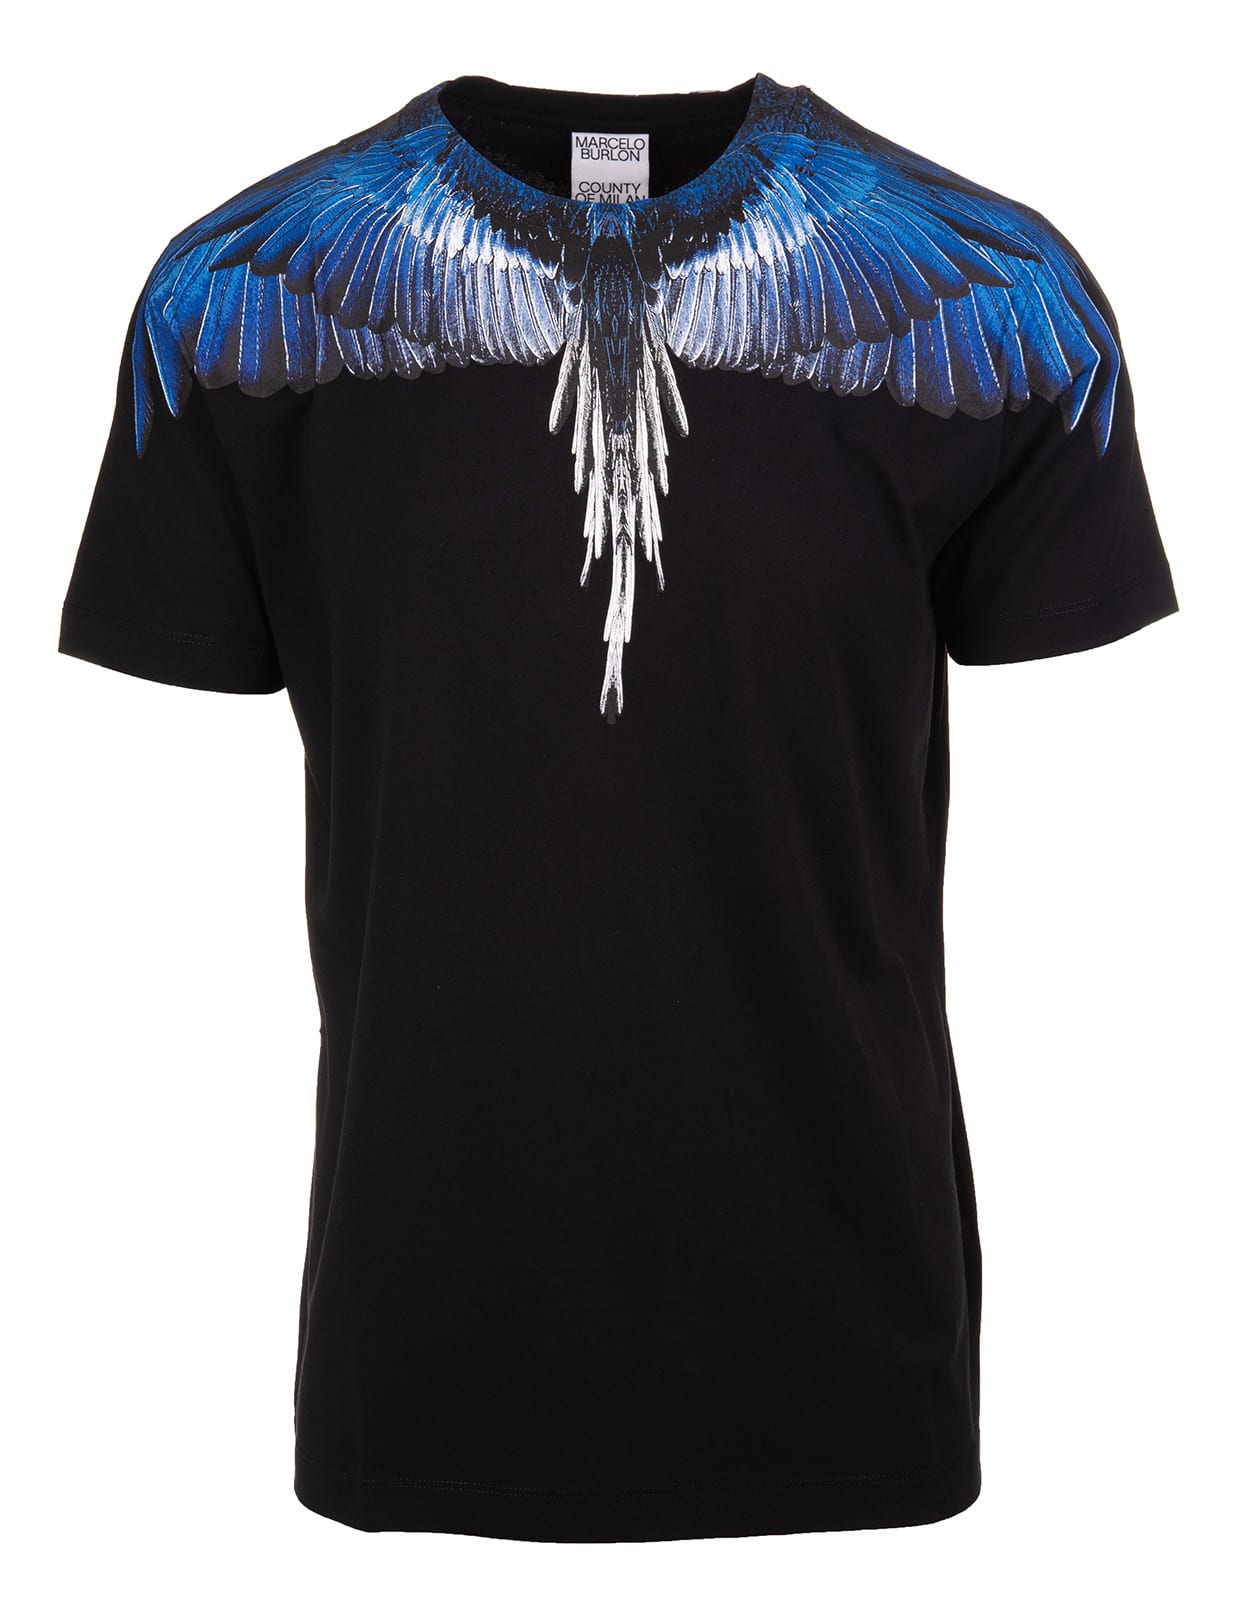 Marcelo Burlon Man Wings Black And Blue T-shirt